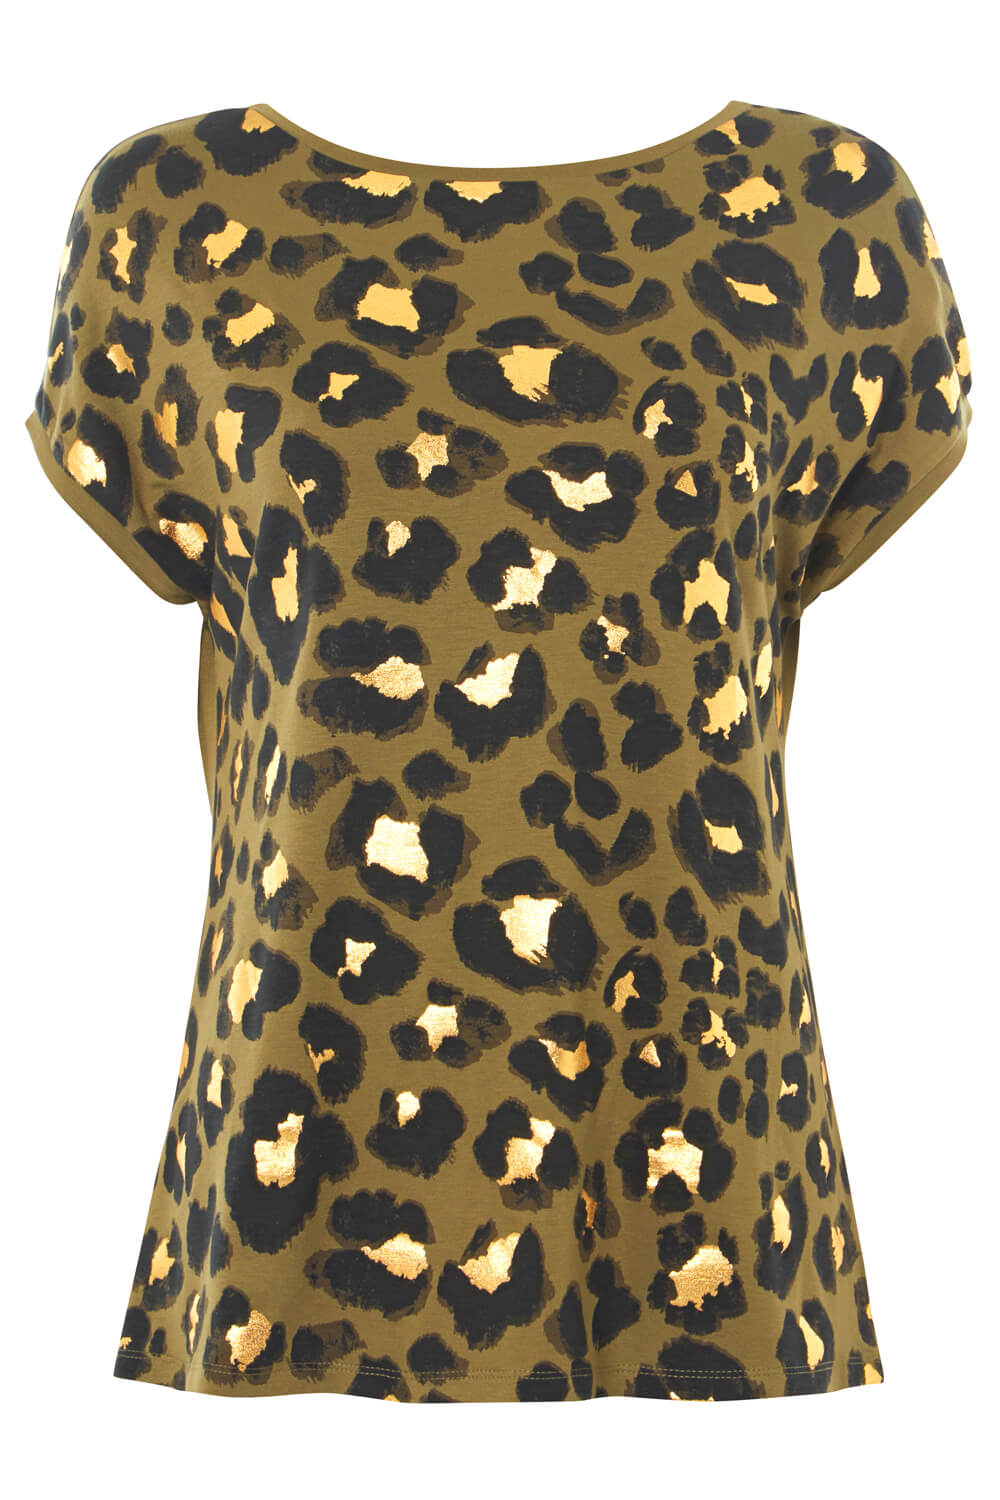 Leopard Foil Print T-Shirt in Khaki - Roman Originals UK